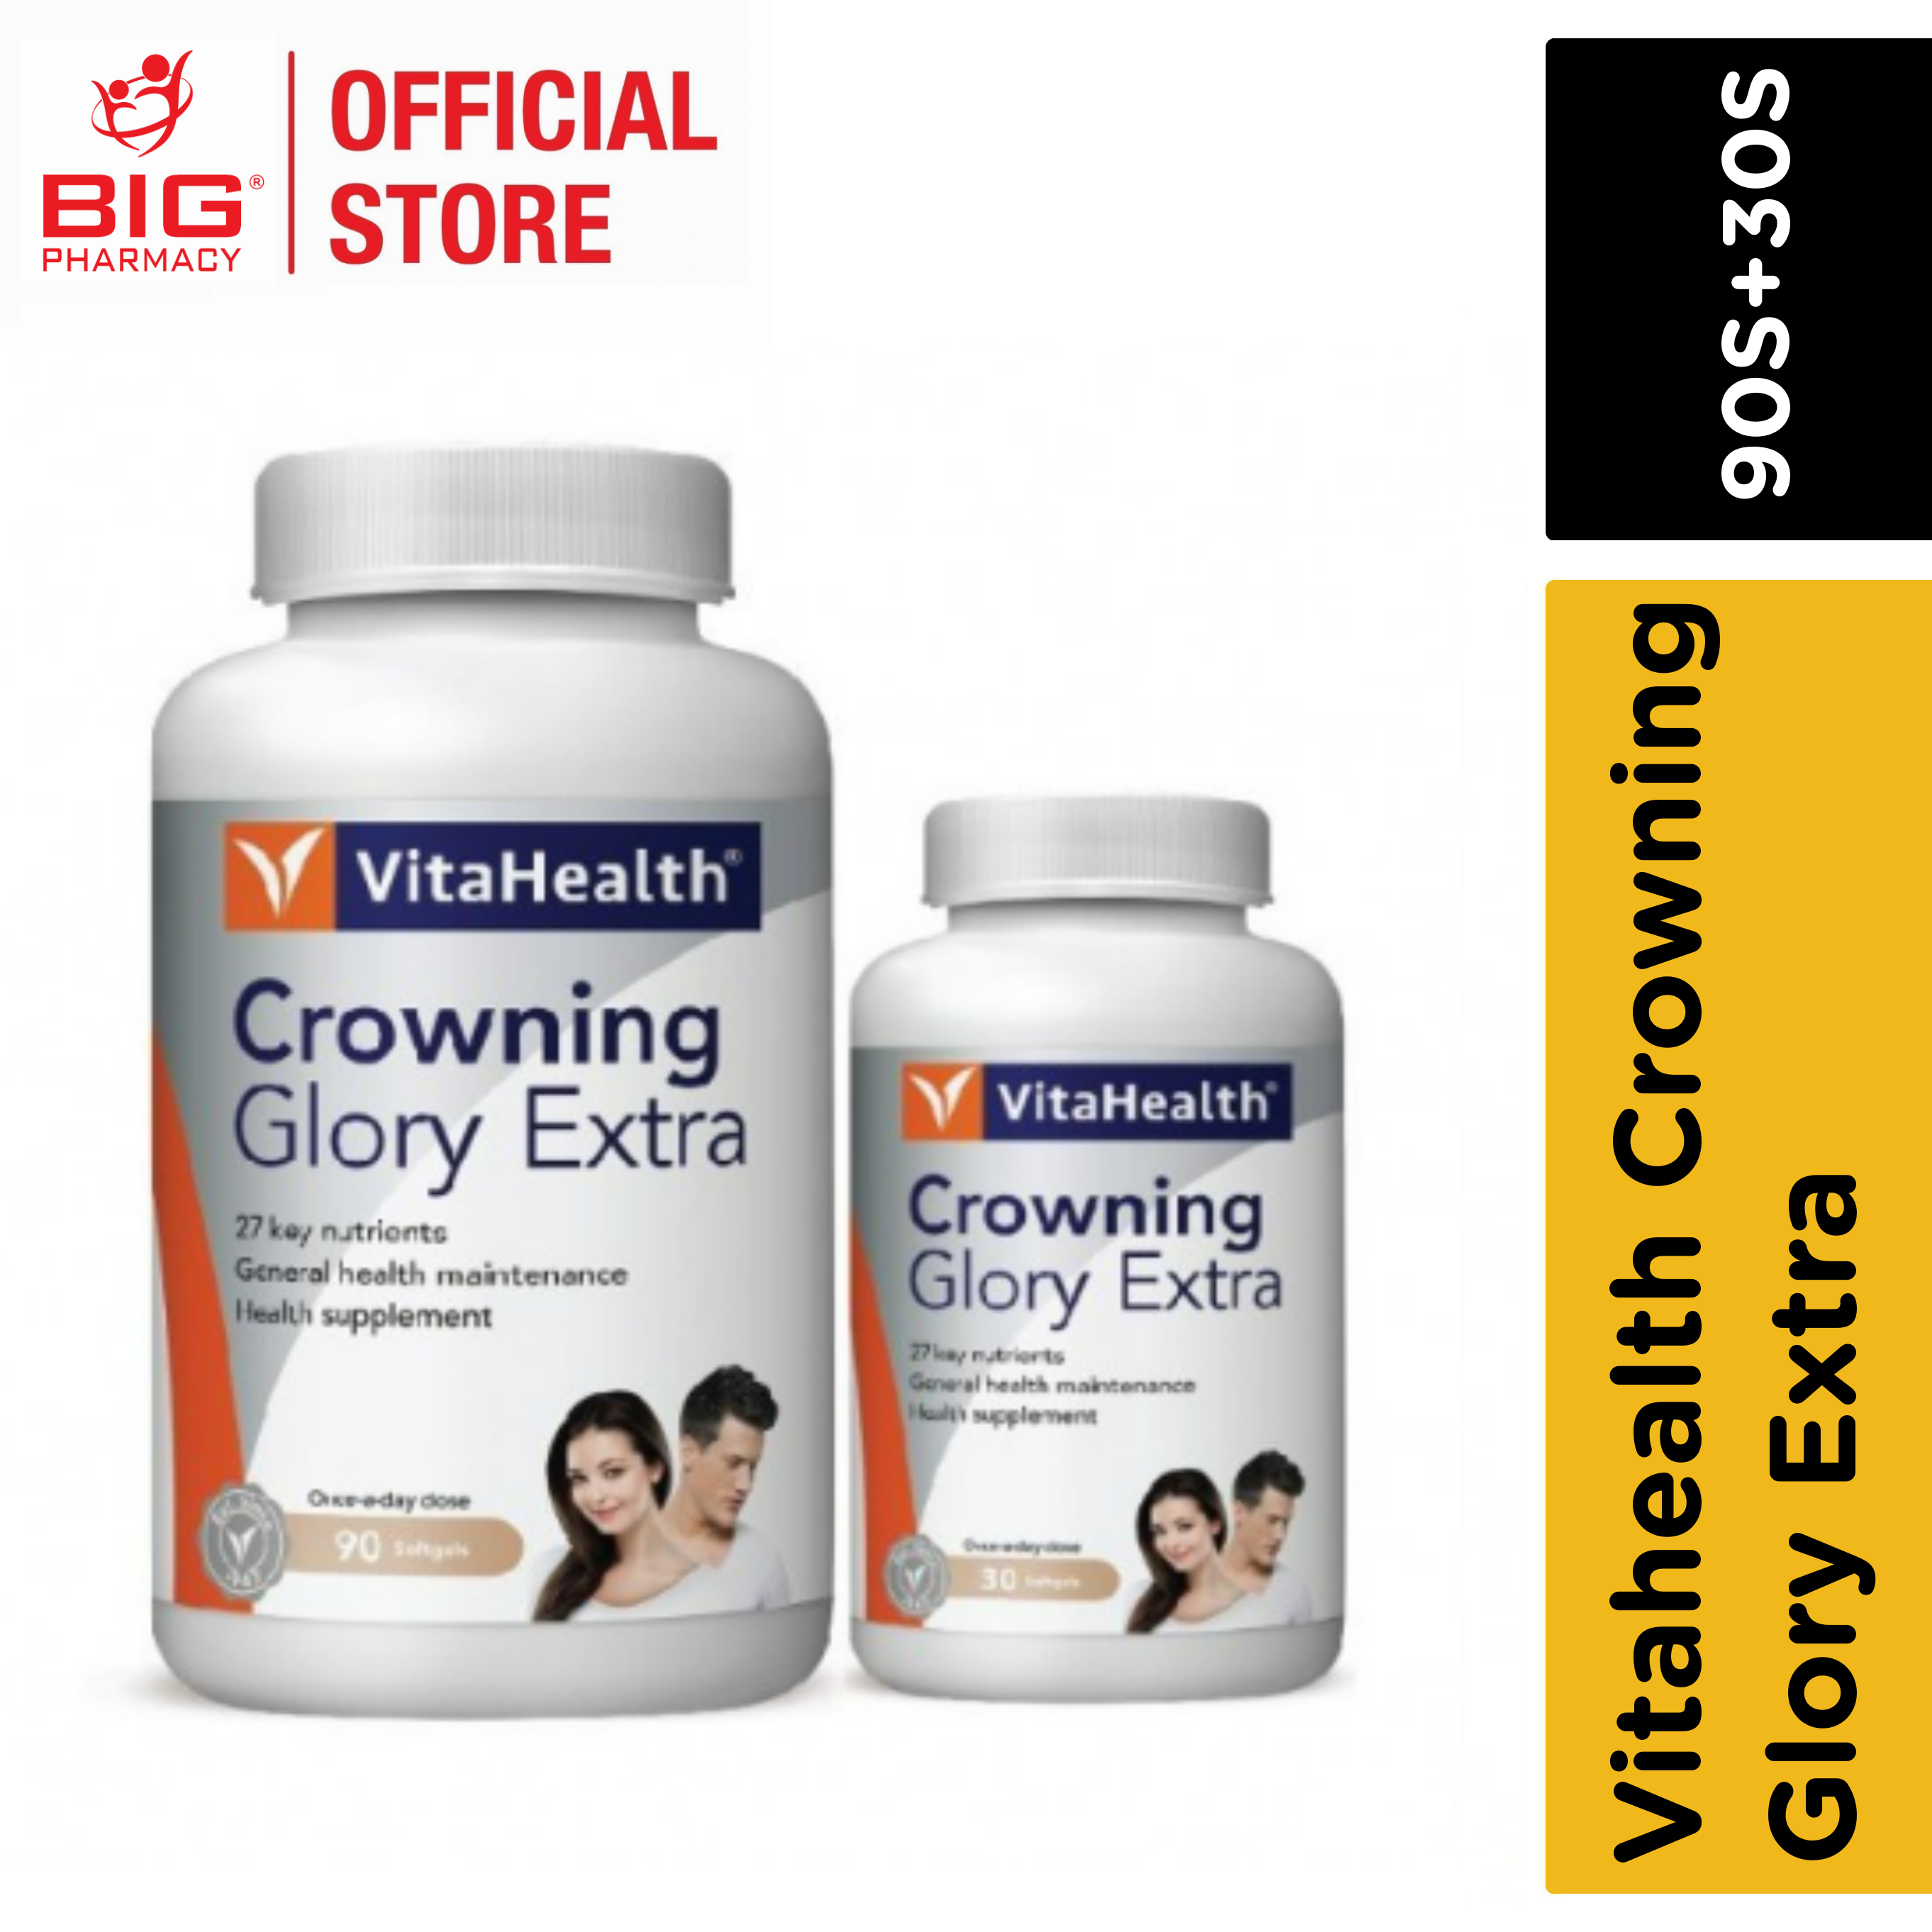 Vitahealth Crowning Glory Extra - Big Pharmacy E-store | Big Pharmacy